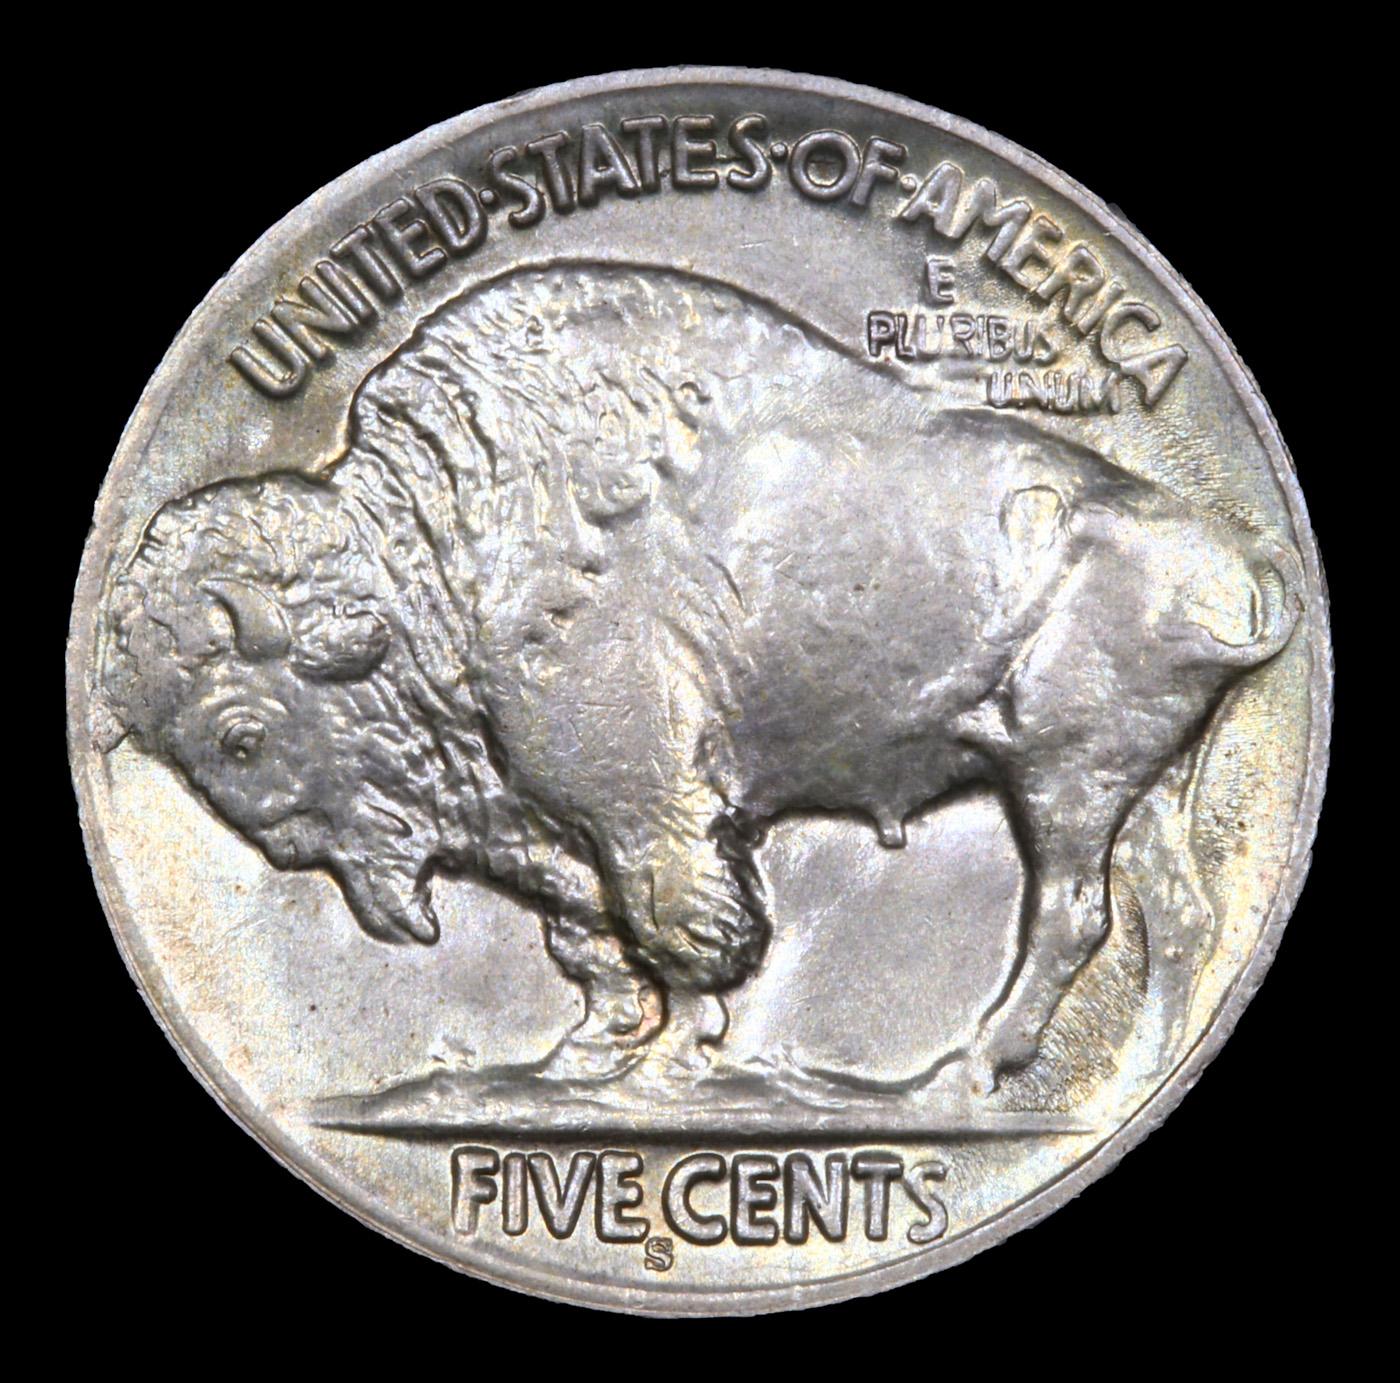 ***Auction Highlight*** 1913-s Ty II Buffalo Nickel 5c Graded ms66+ By SEGS (fc)